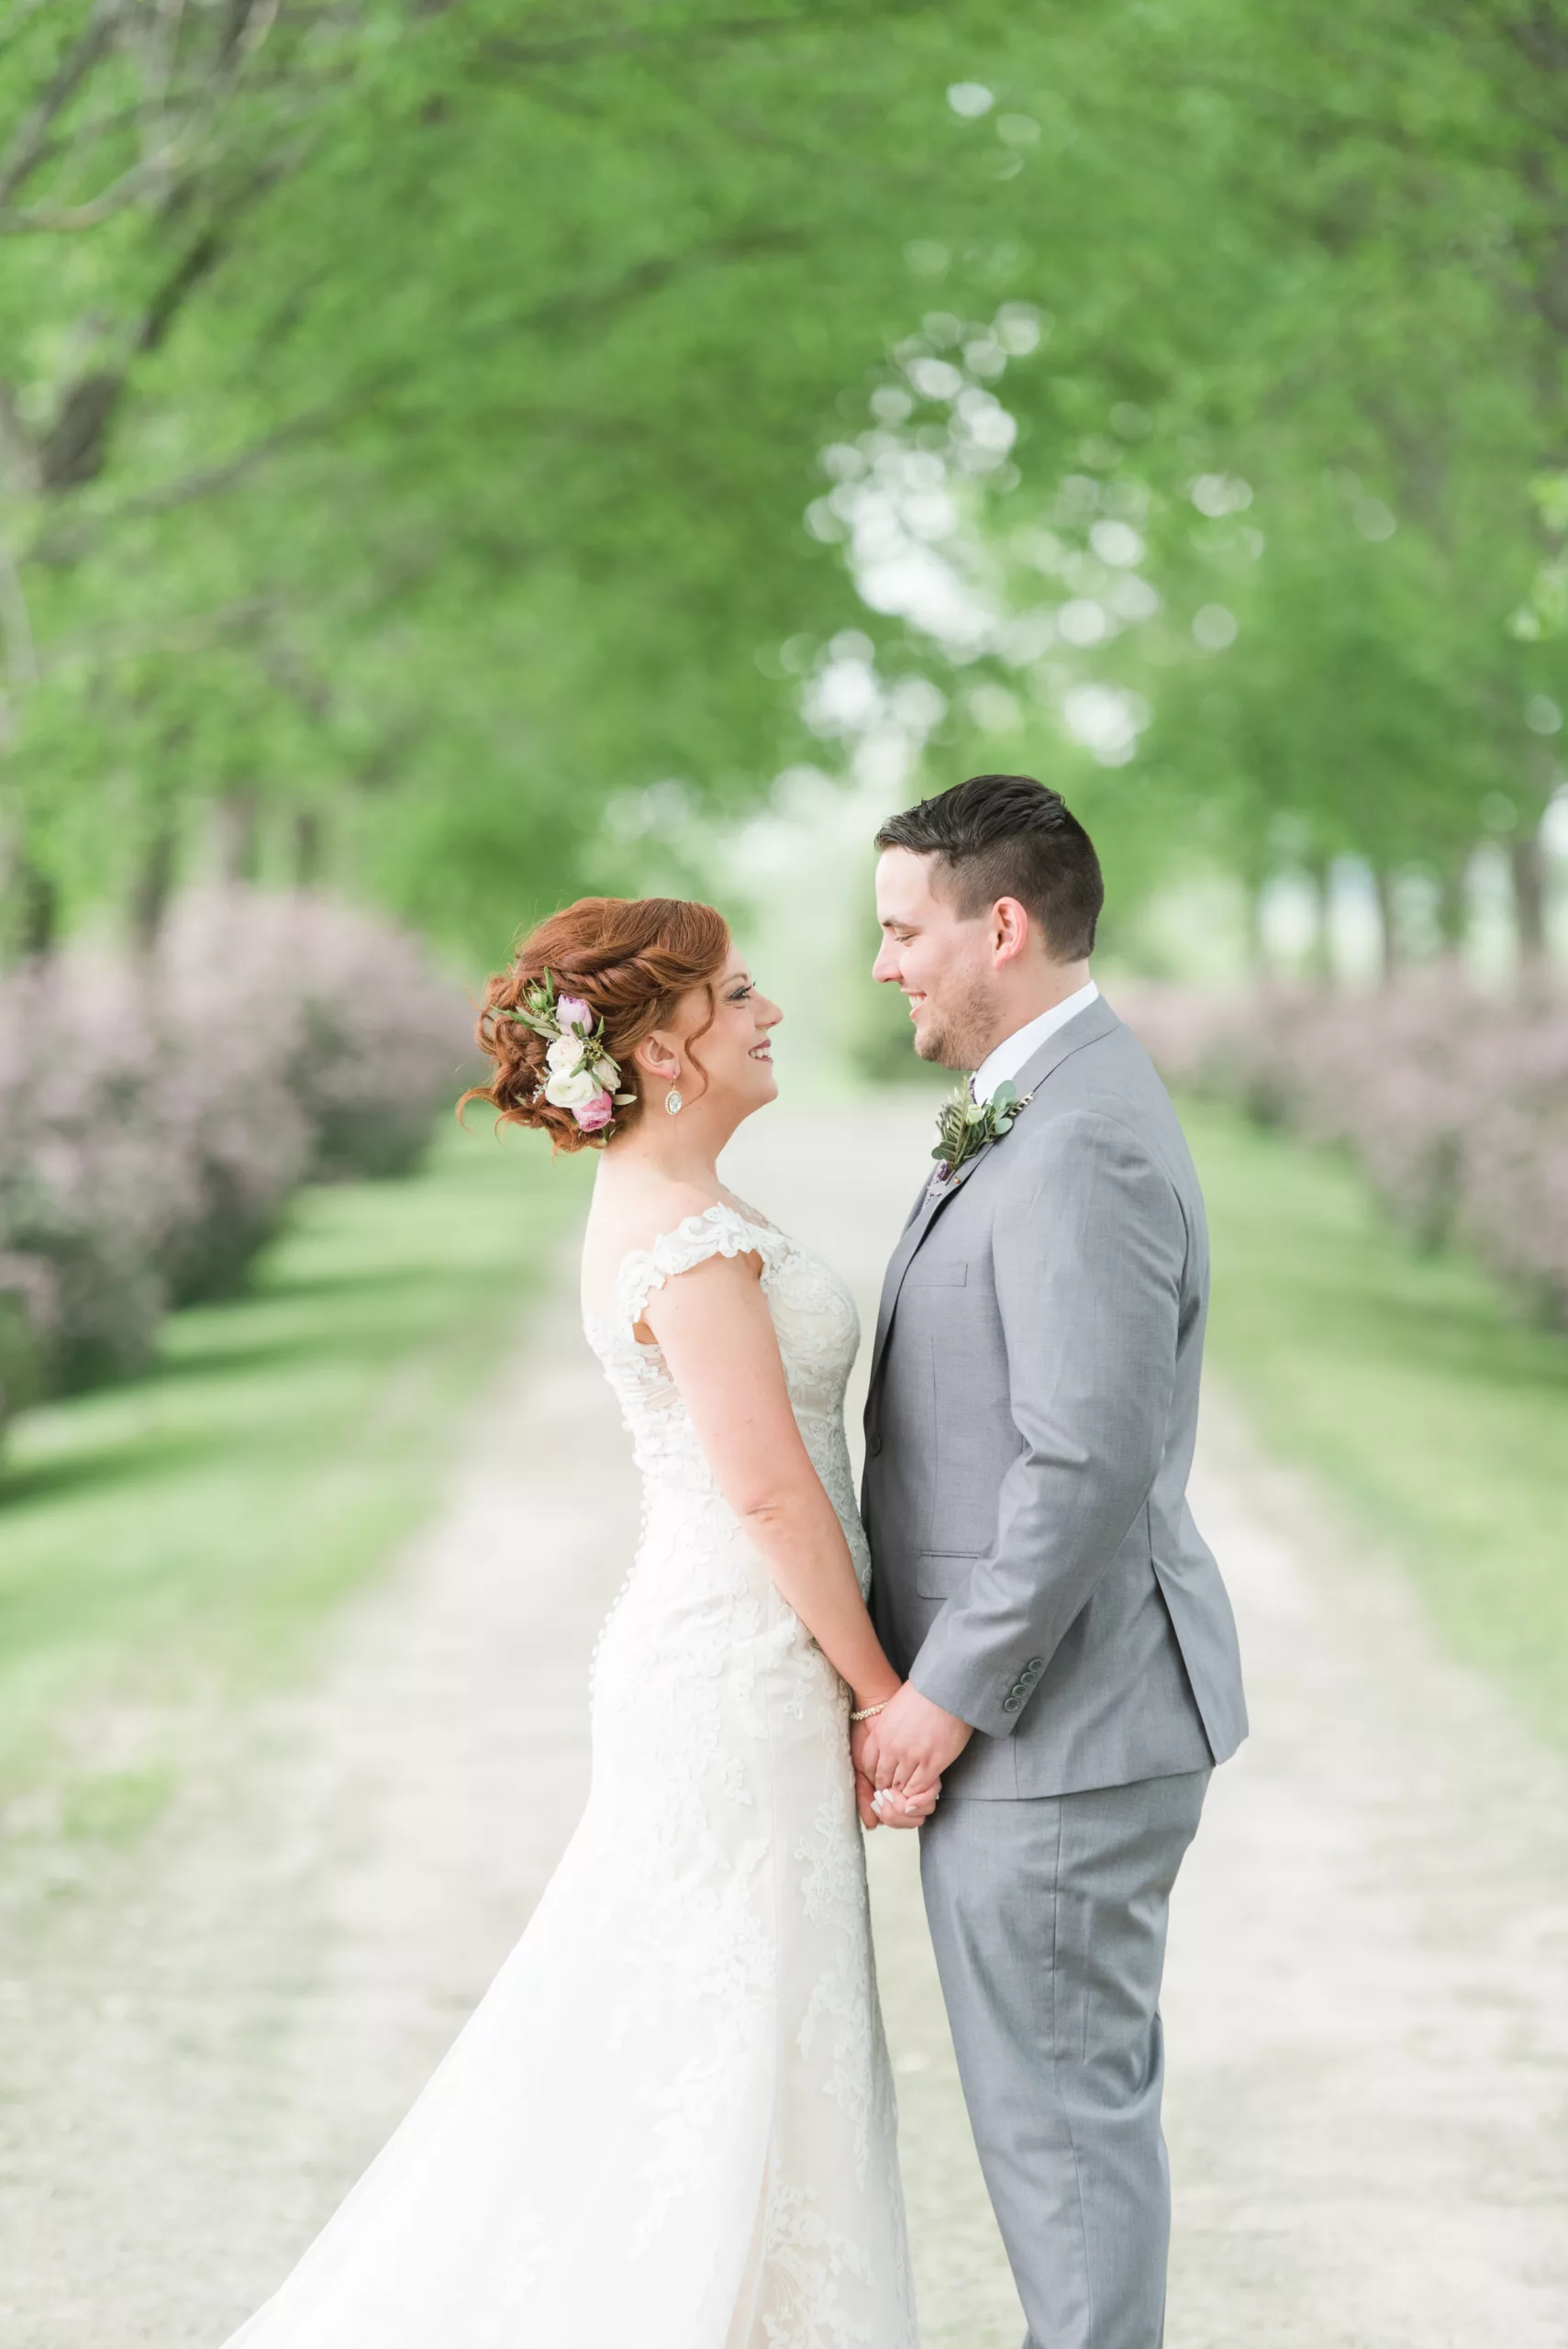 Molly & Brayton's sugar grove wedding in Newton Iowa